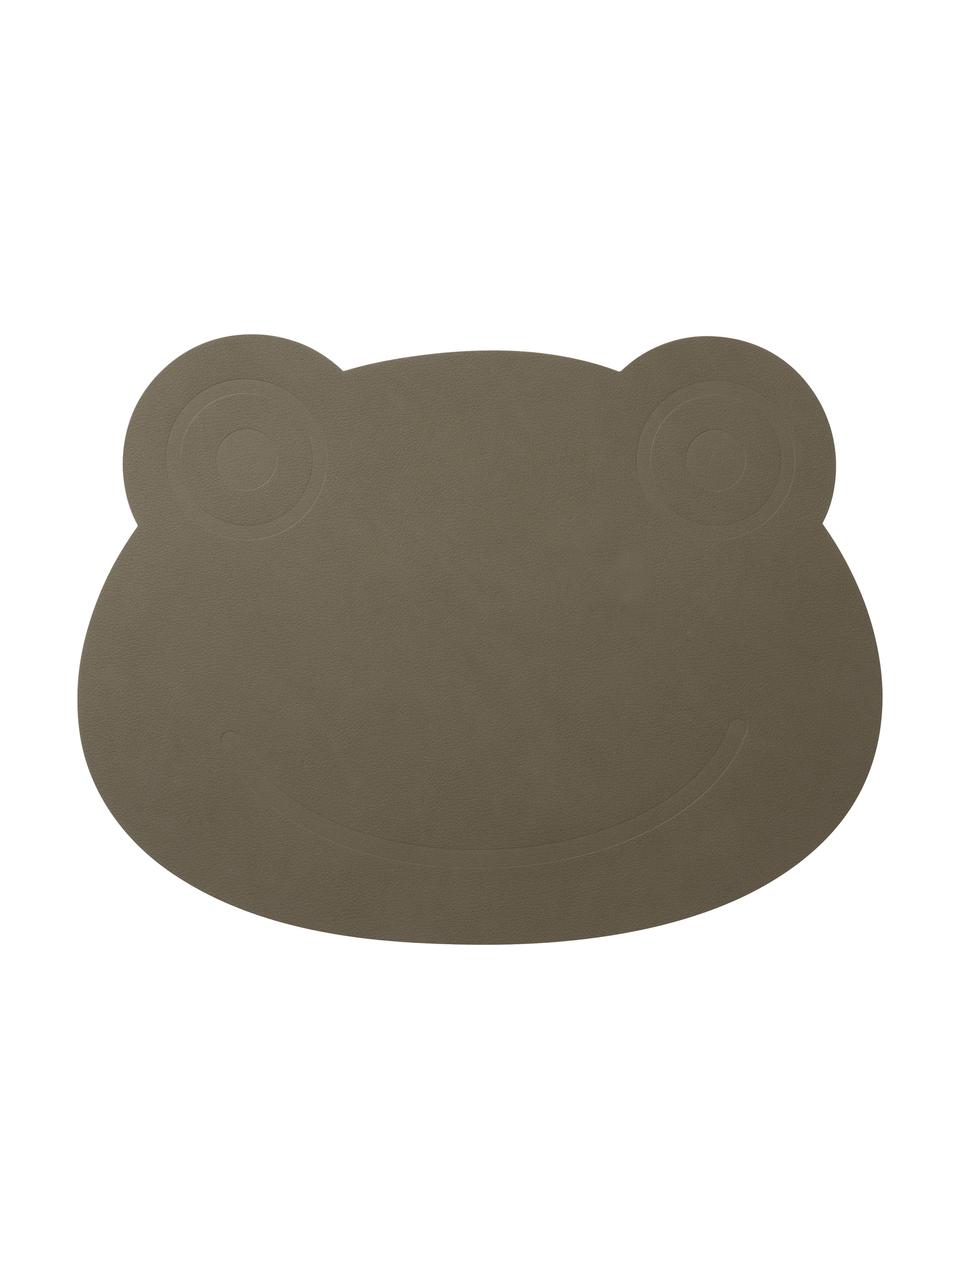 Leder-Tischset Frog in Graugrün, Leder, Gummi, Graugrün, B 38 x L 28 cm